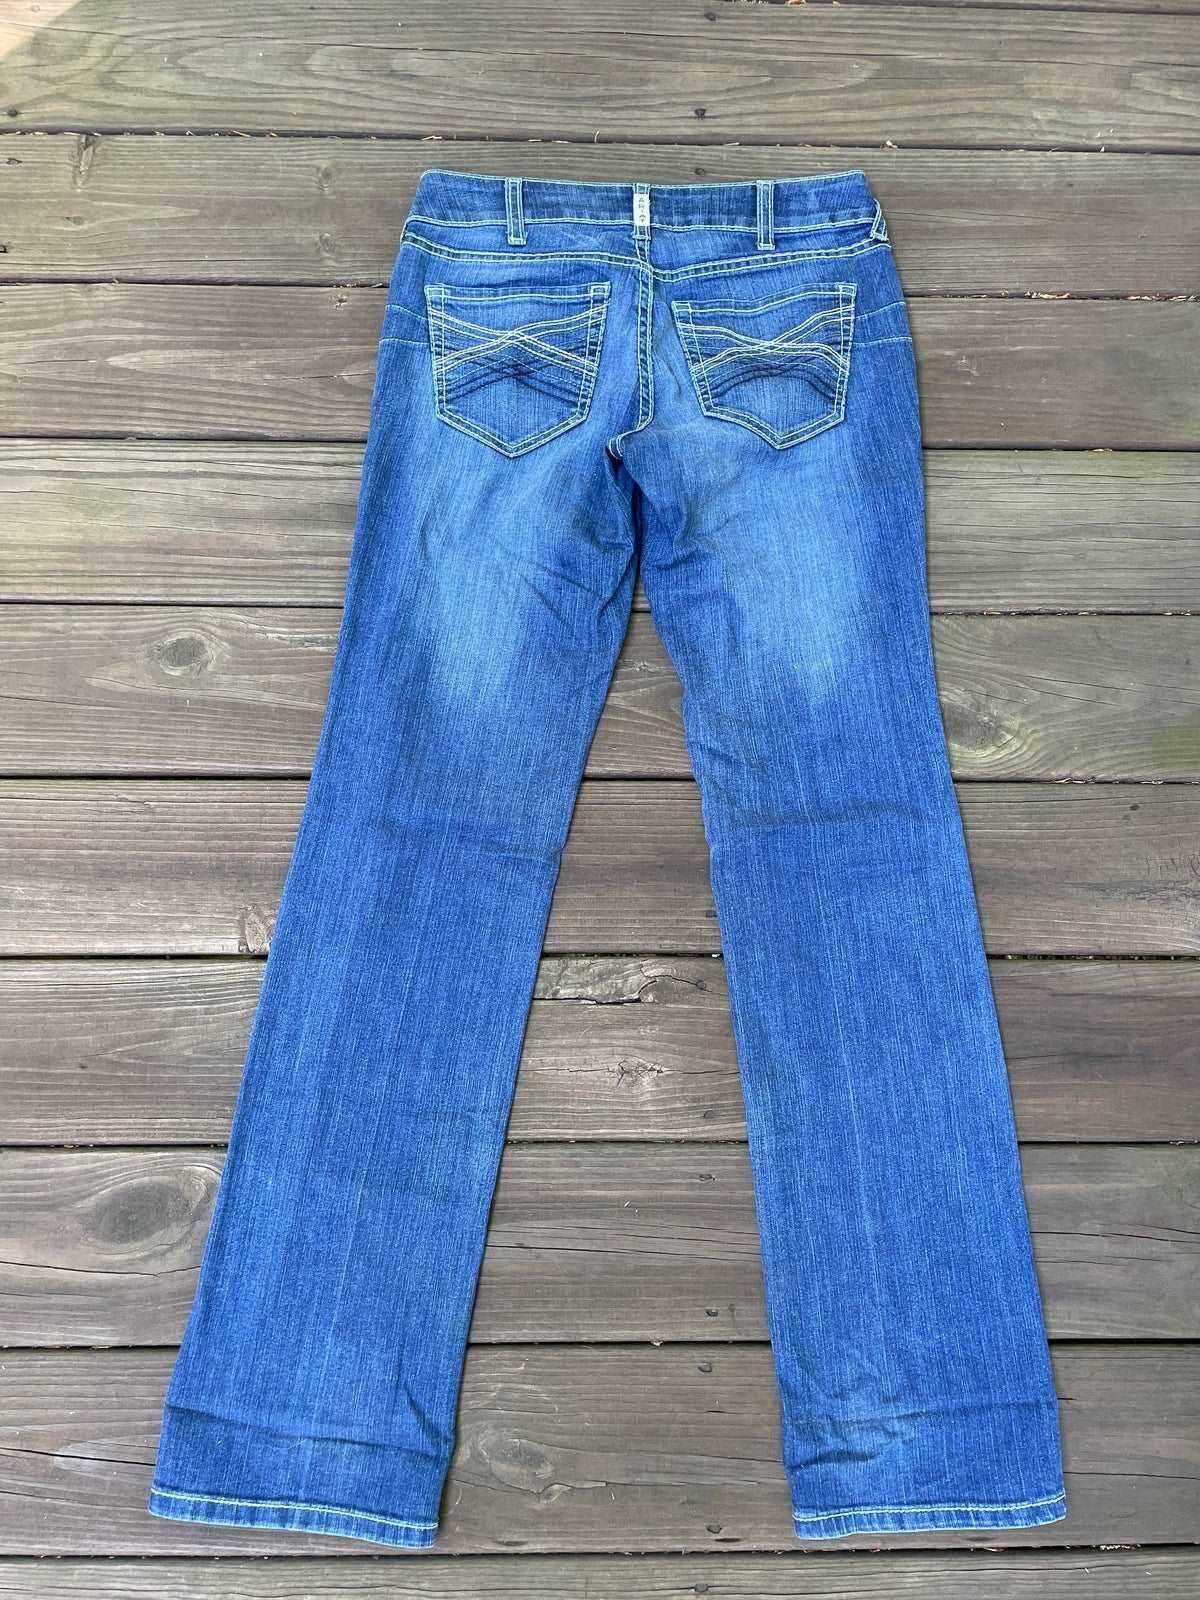 ThriftedEquestrian Clothing 28L Ariat Real Denim Mid Rise Straight Leg Jeans - 28L